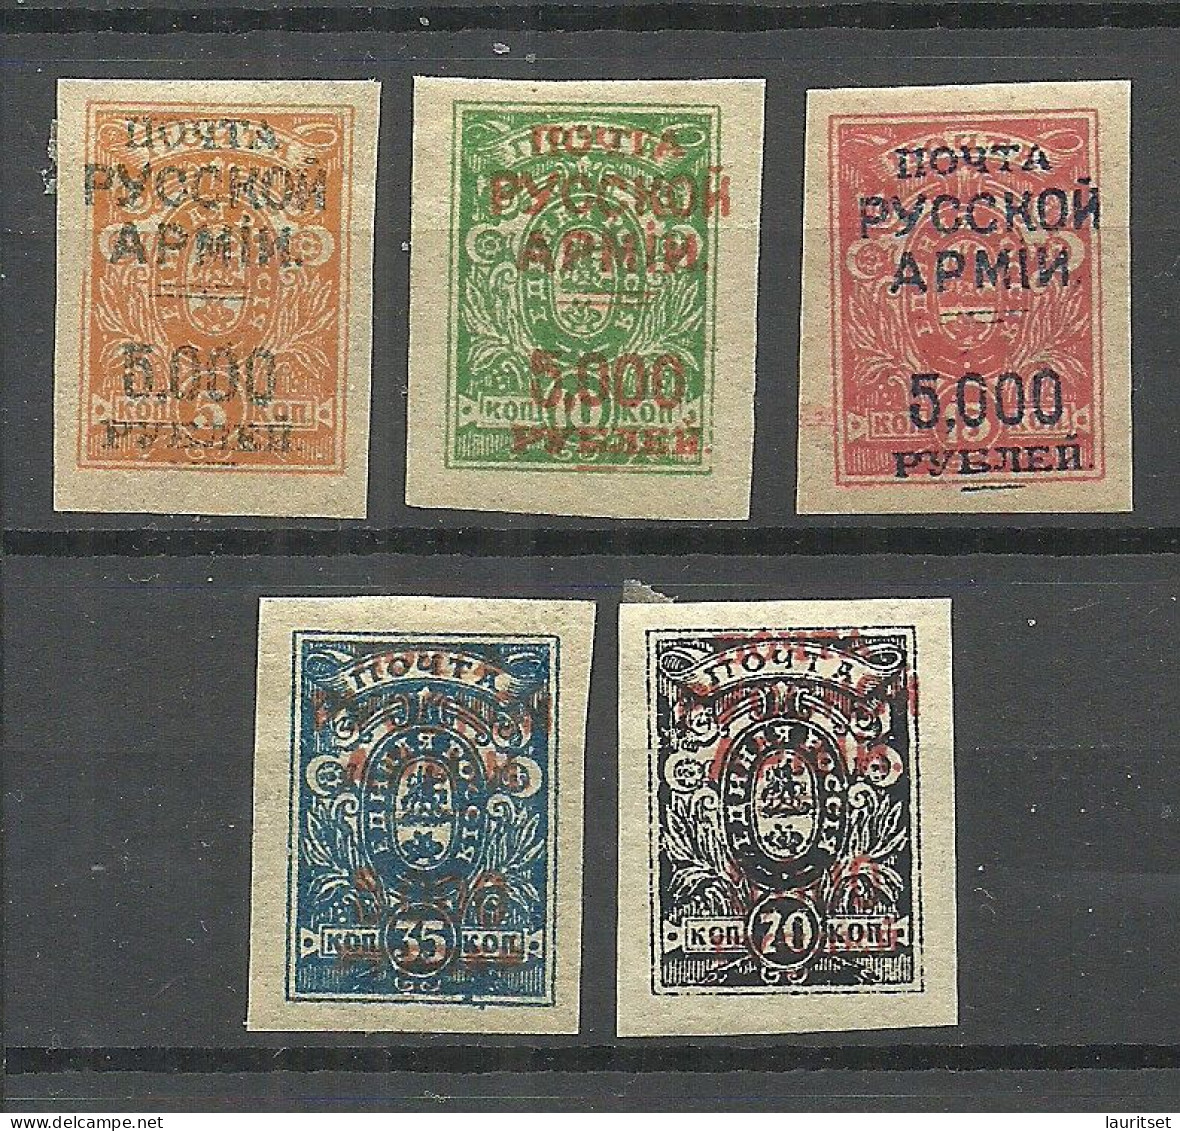 RUSSLAND RUSSIA 1920 Bürgerkrieg Wrangel Armee Lagerpost Gallipoli Denikin Army Stamps * - Wrangel-Armee